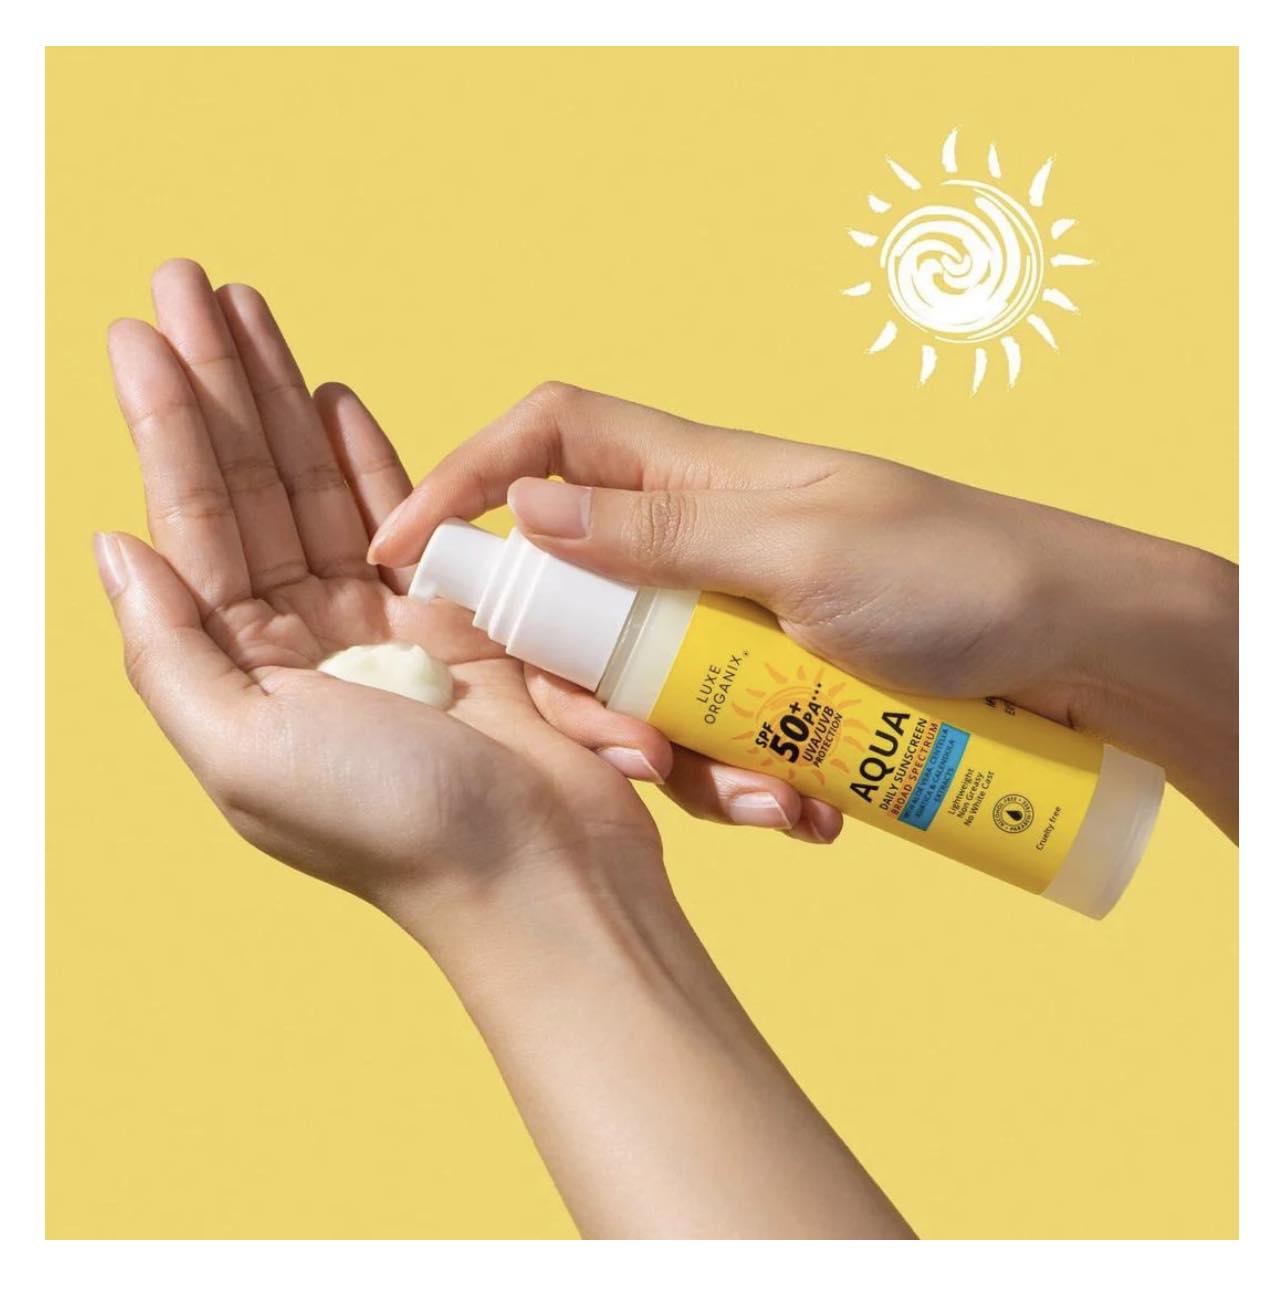 Luxe Organix SPF 50+ PA*** UVA/UVB Protection Aqua Daily Sunscreen 50ml